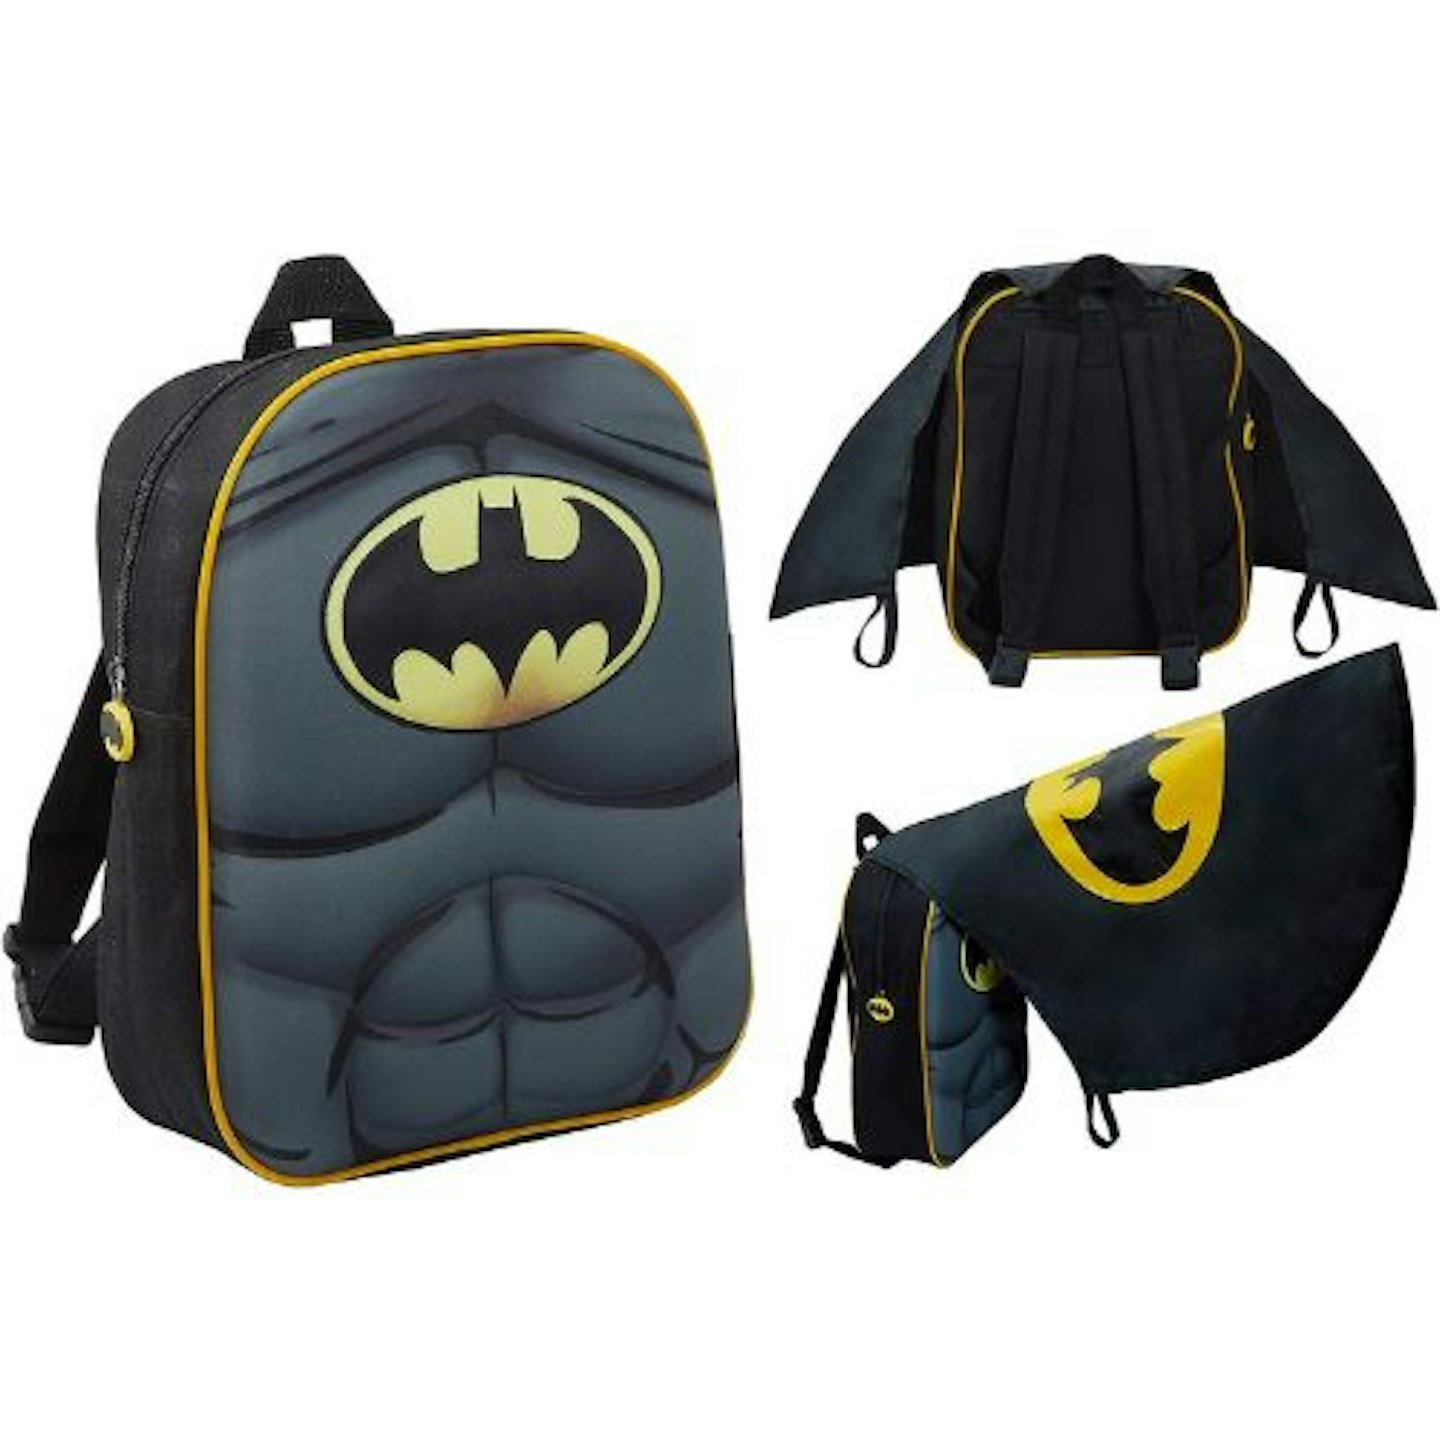 Best back to school essentials shopping guide  DC Comics Boys Batman Backpack